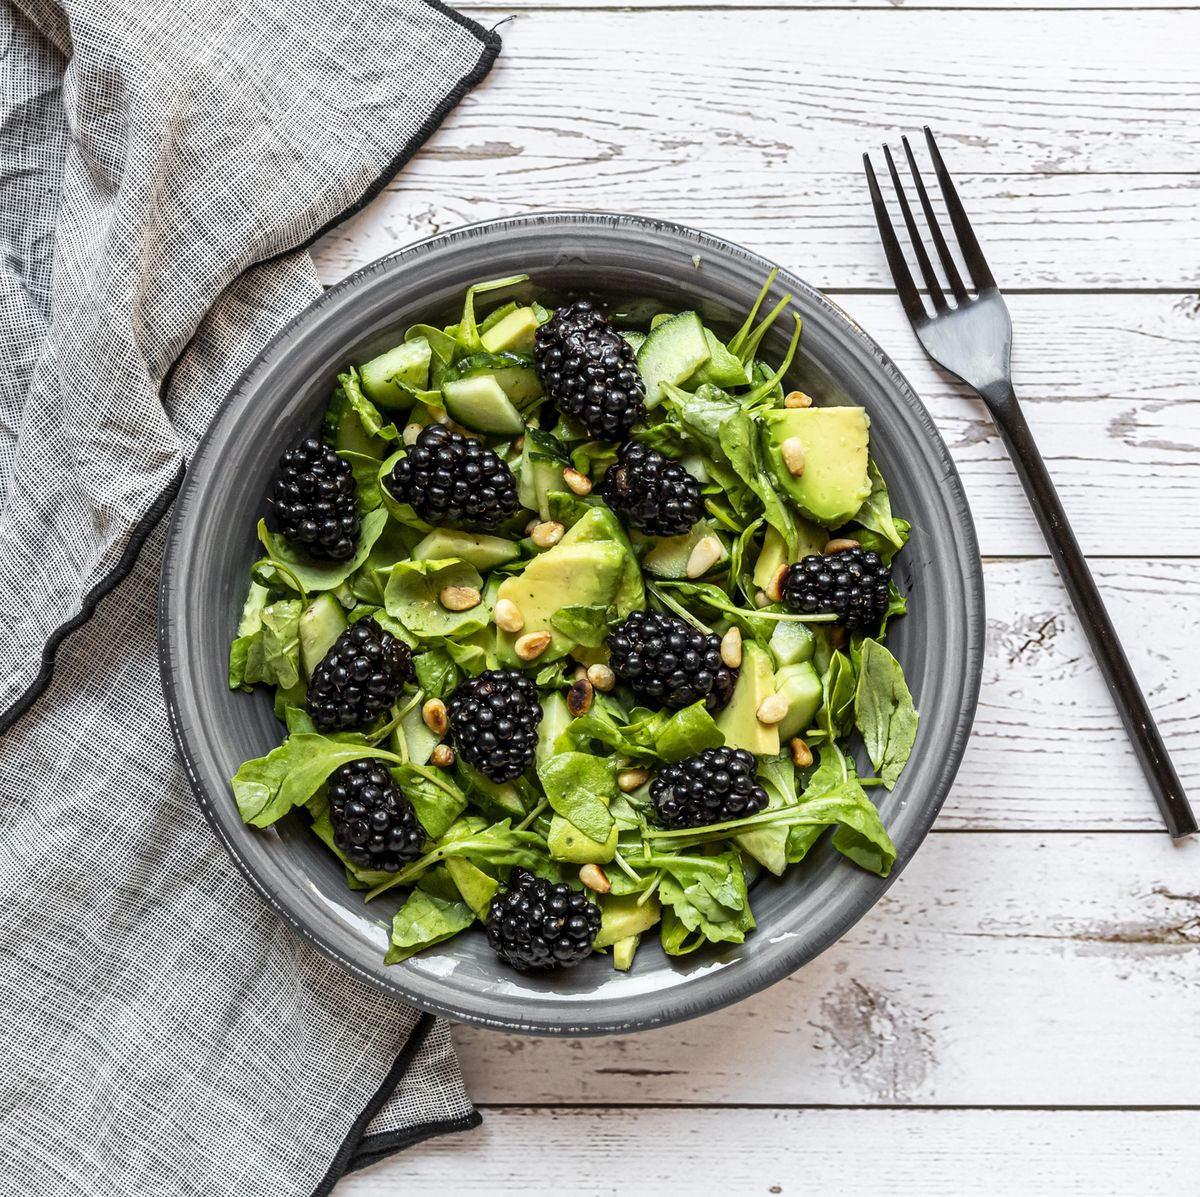 raw food diet vegetarian salad with arugula, avocado, cucumber and blackberries